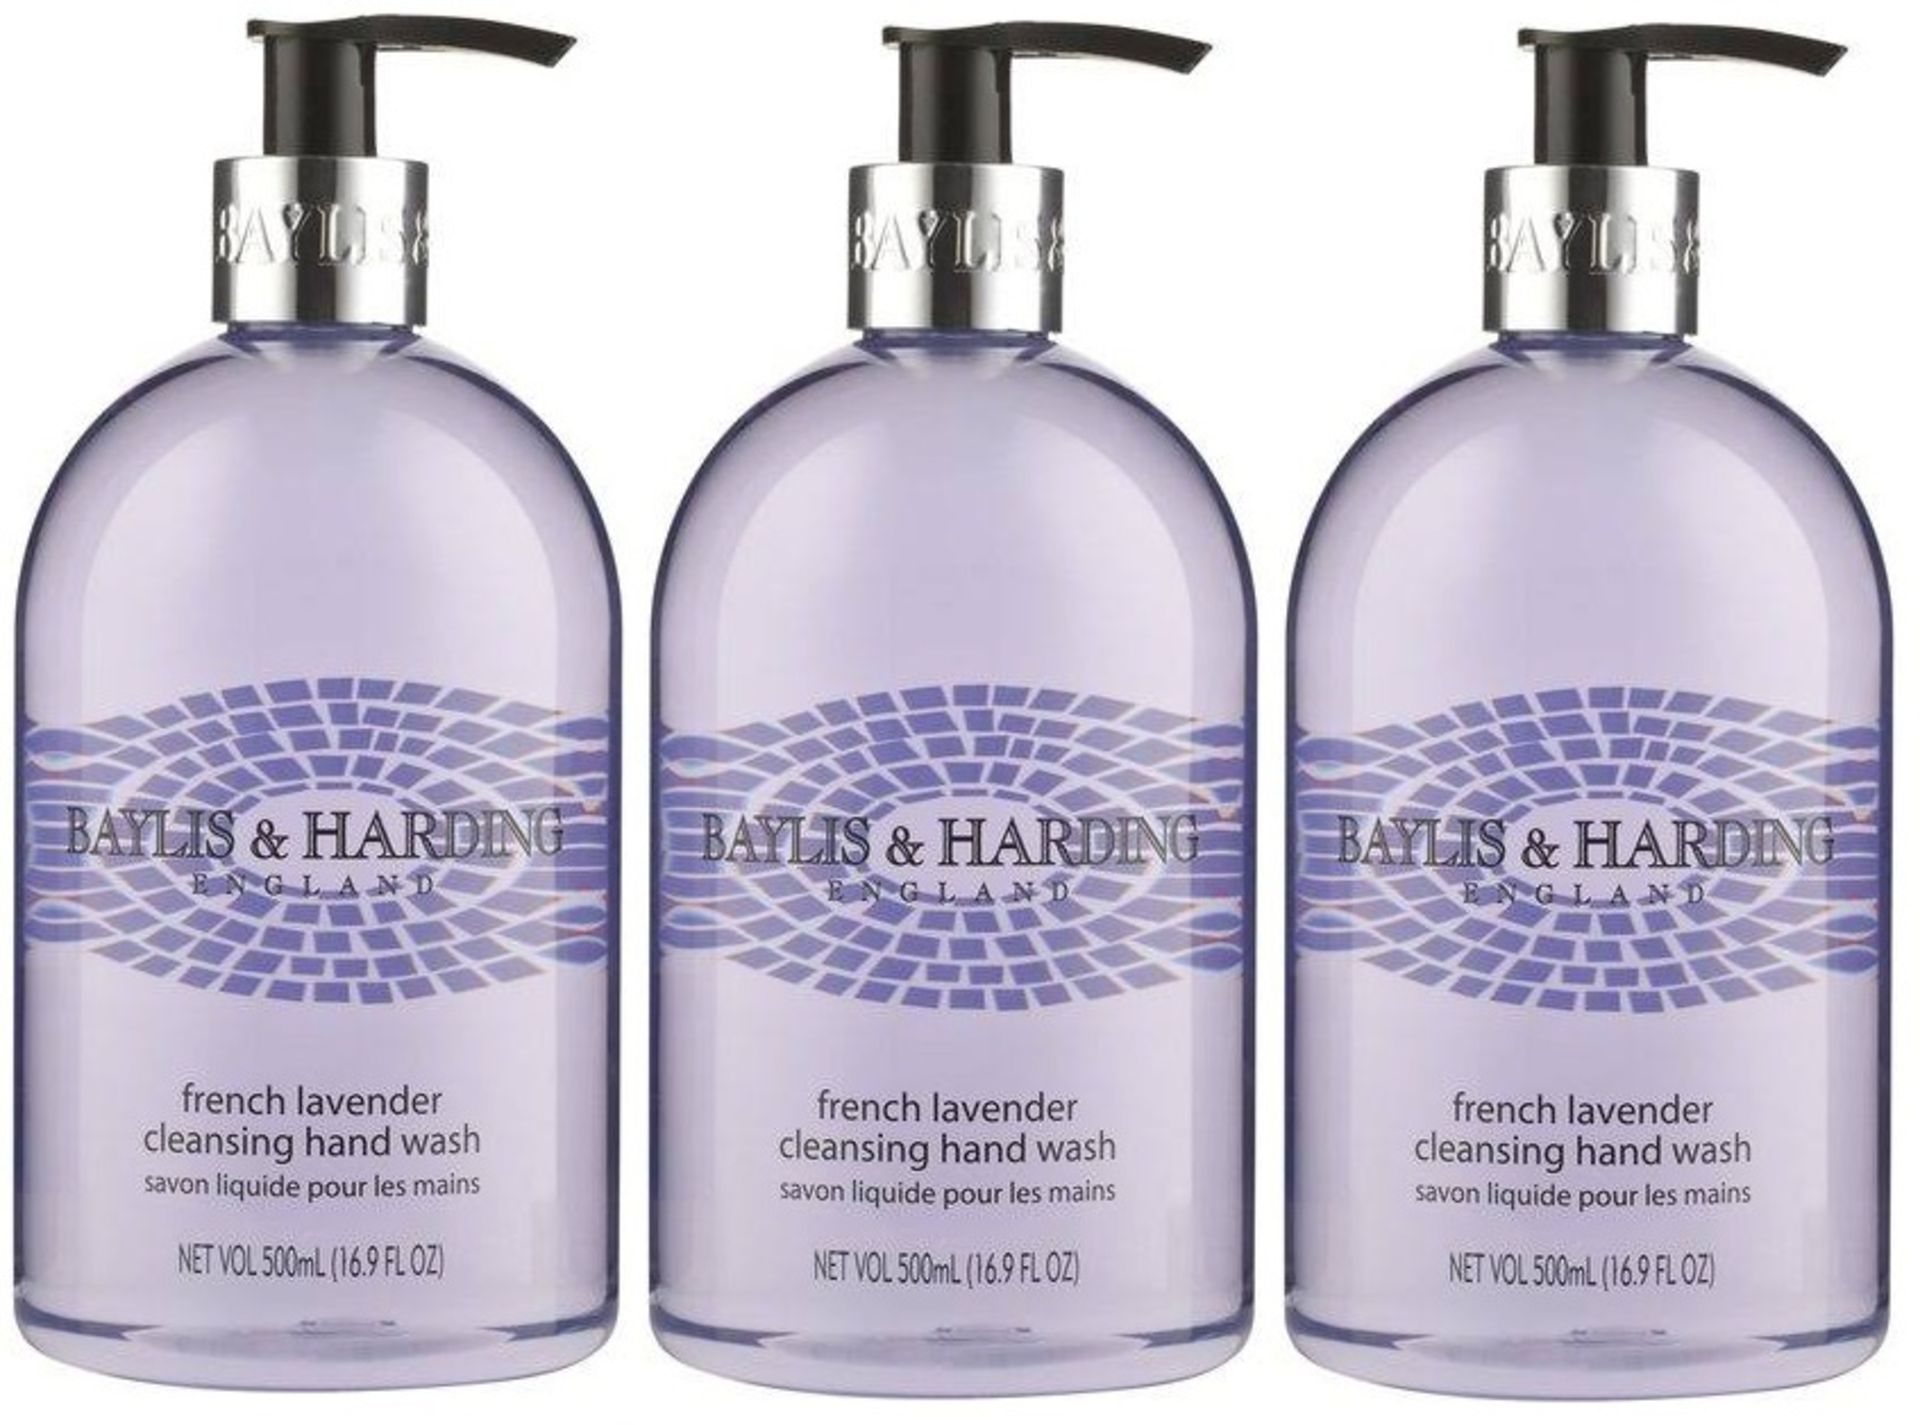 V *TRADE QTY* Brand New Three Bottles Of Baylis & Harding French Lavender Cleansing Handwash 500ml -